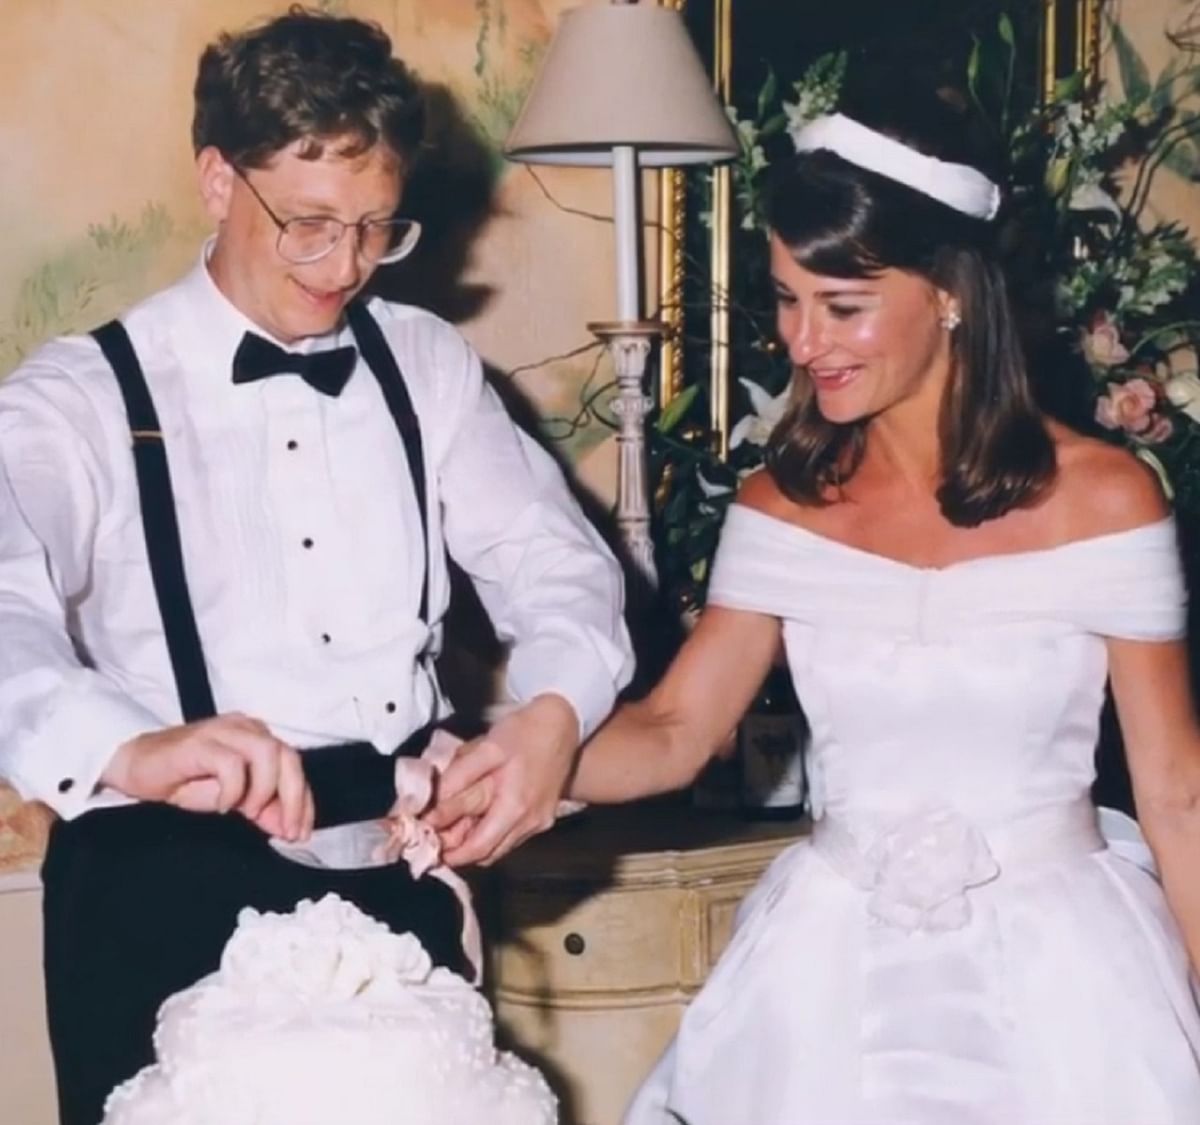 In 1994, Bill married Melinda at a Hawaiian destination wedding. Credit: Instagram/melindafrenchgates